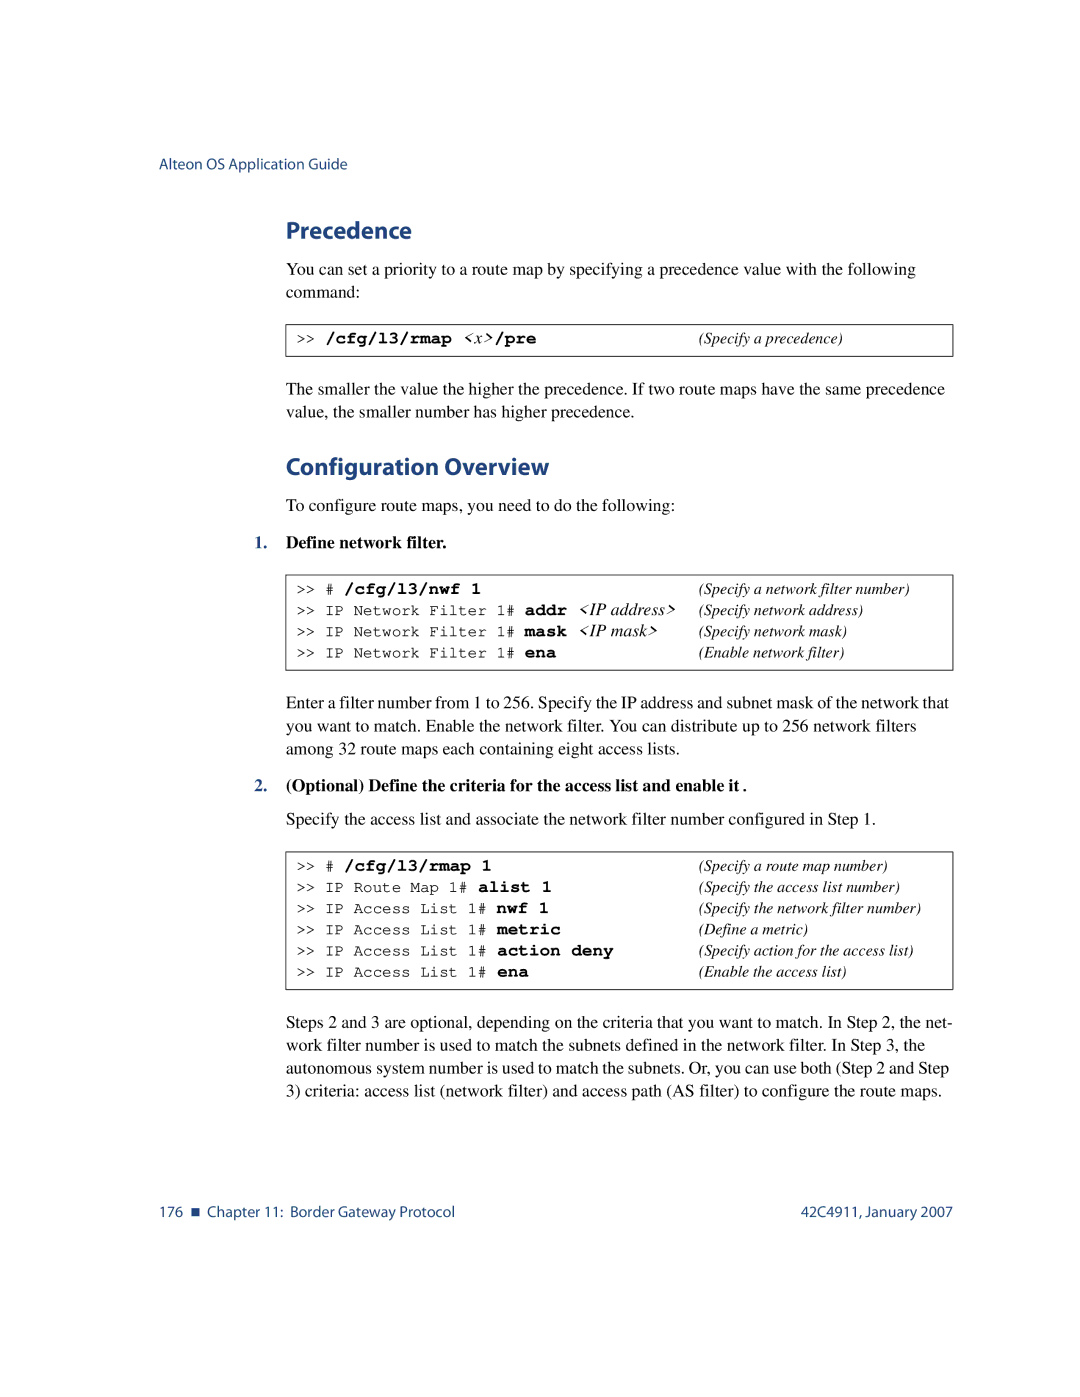 Nortel Networks 42C4911 manual Precedence, Configuration Overview, Define network filter 